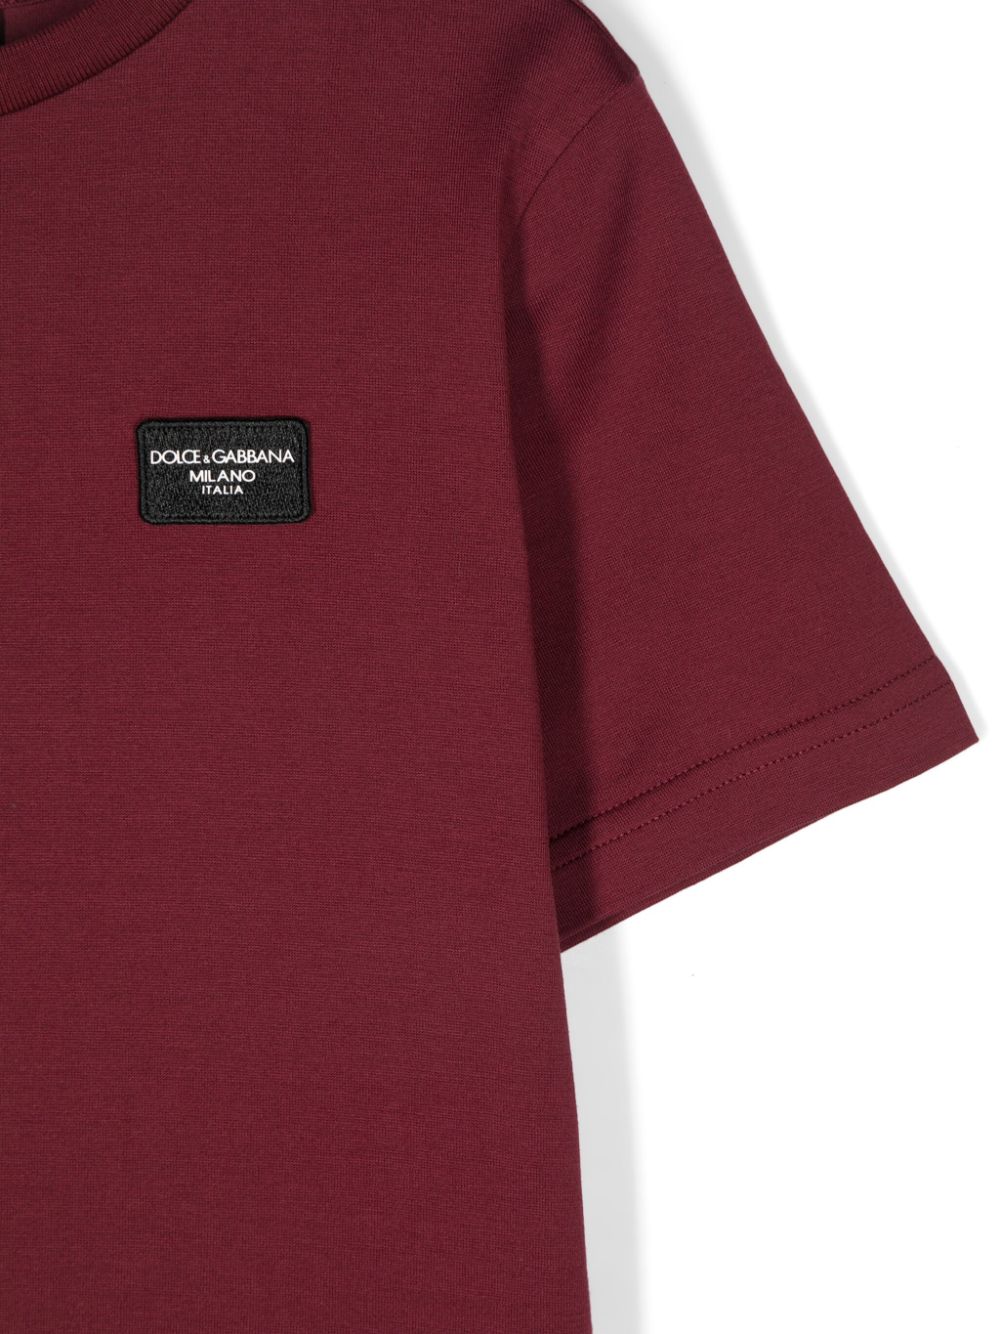 Unisex burgundy cotton t-shirt with logo